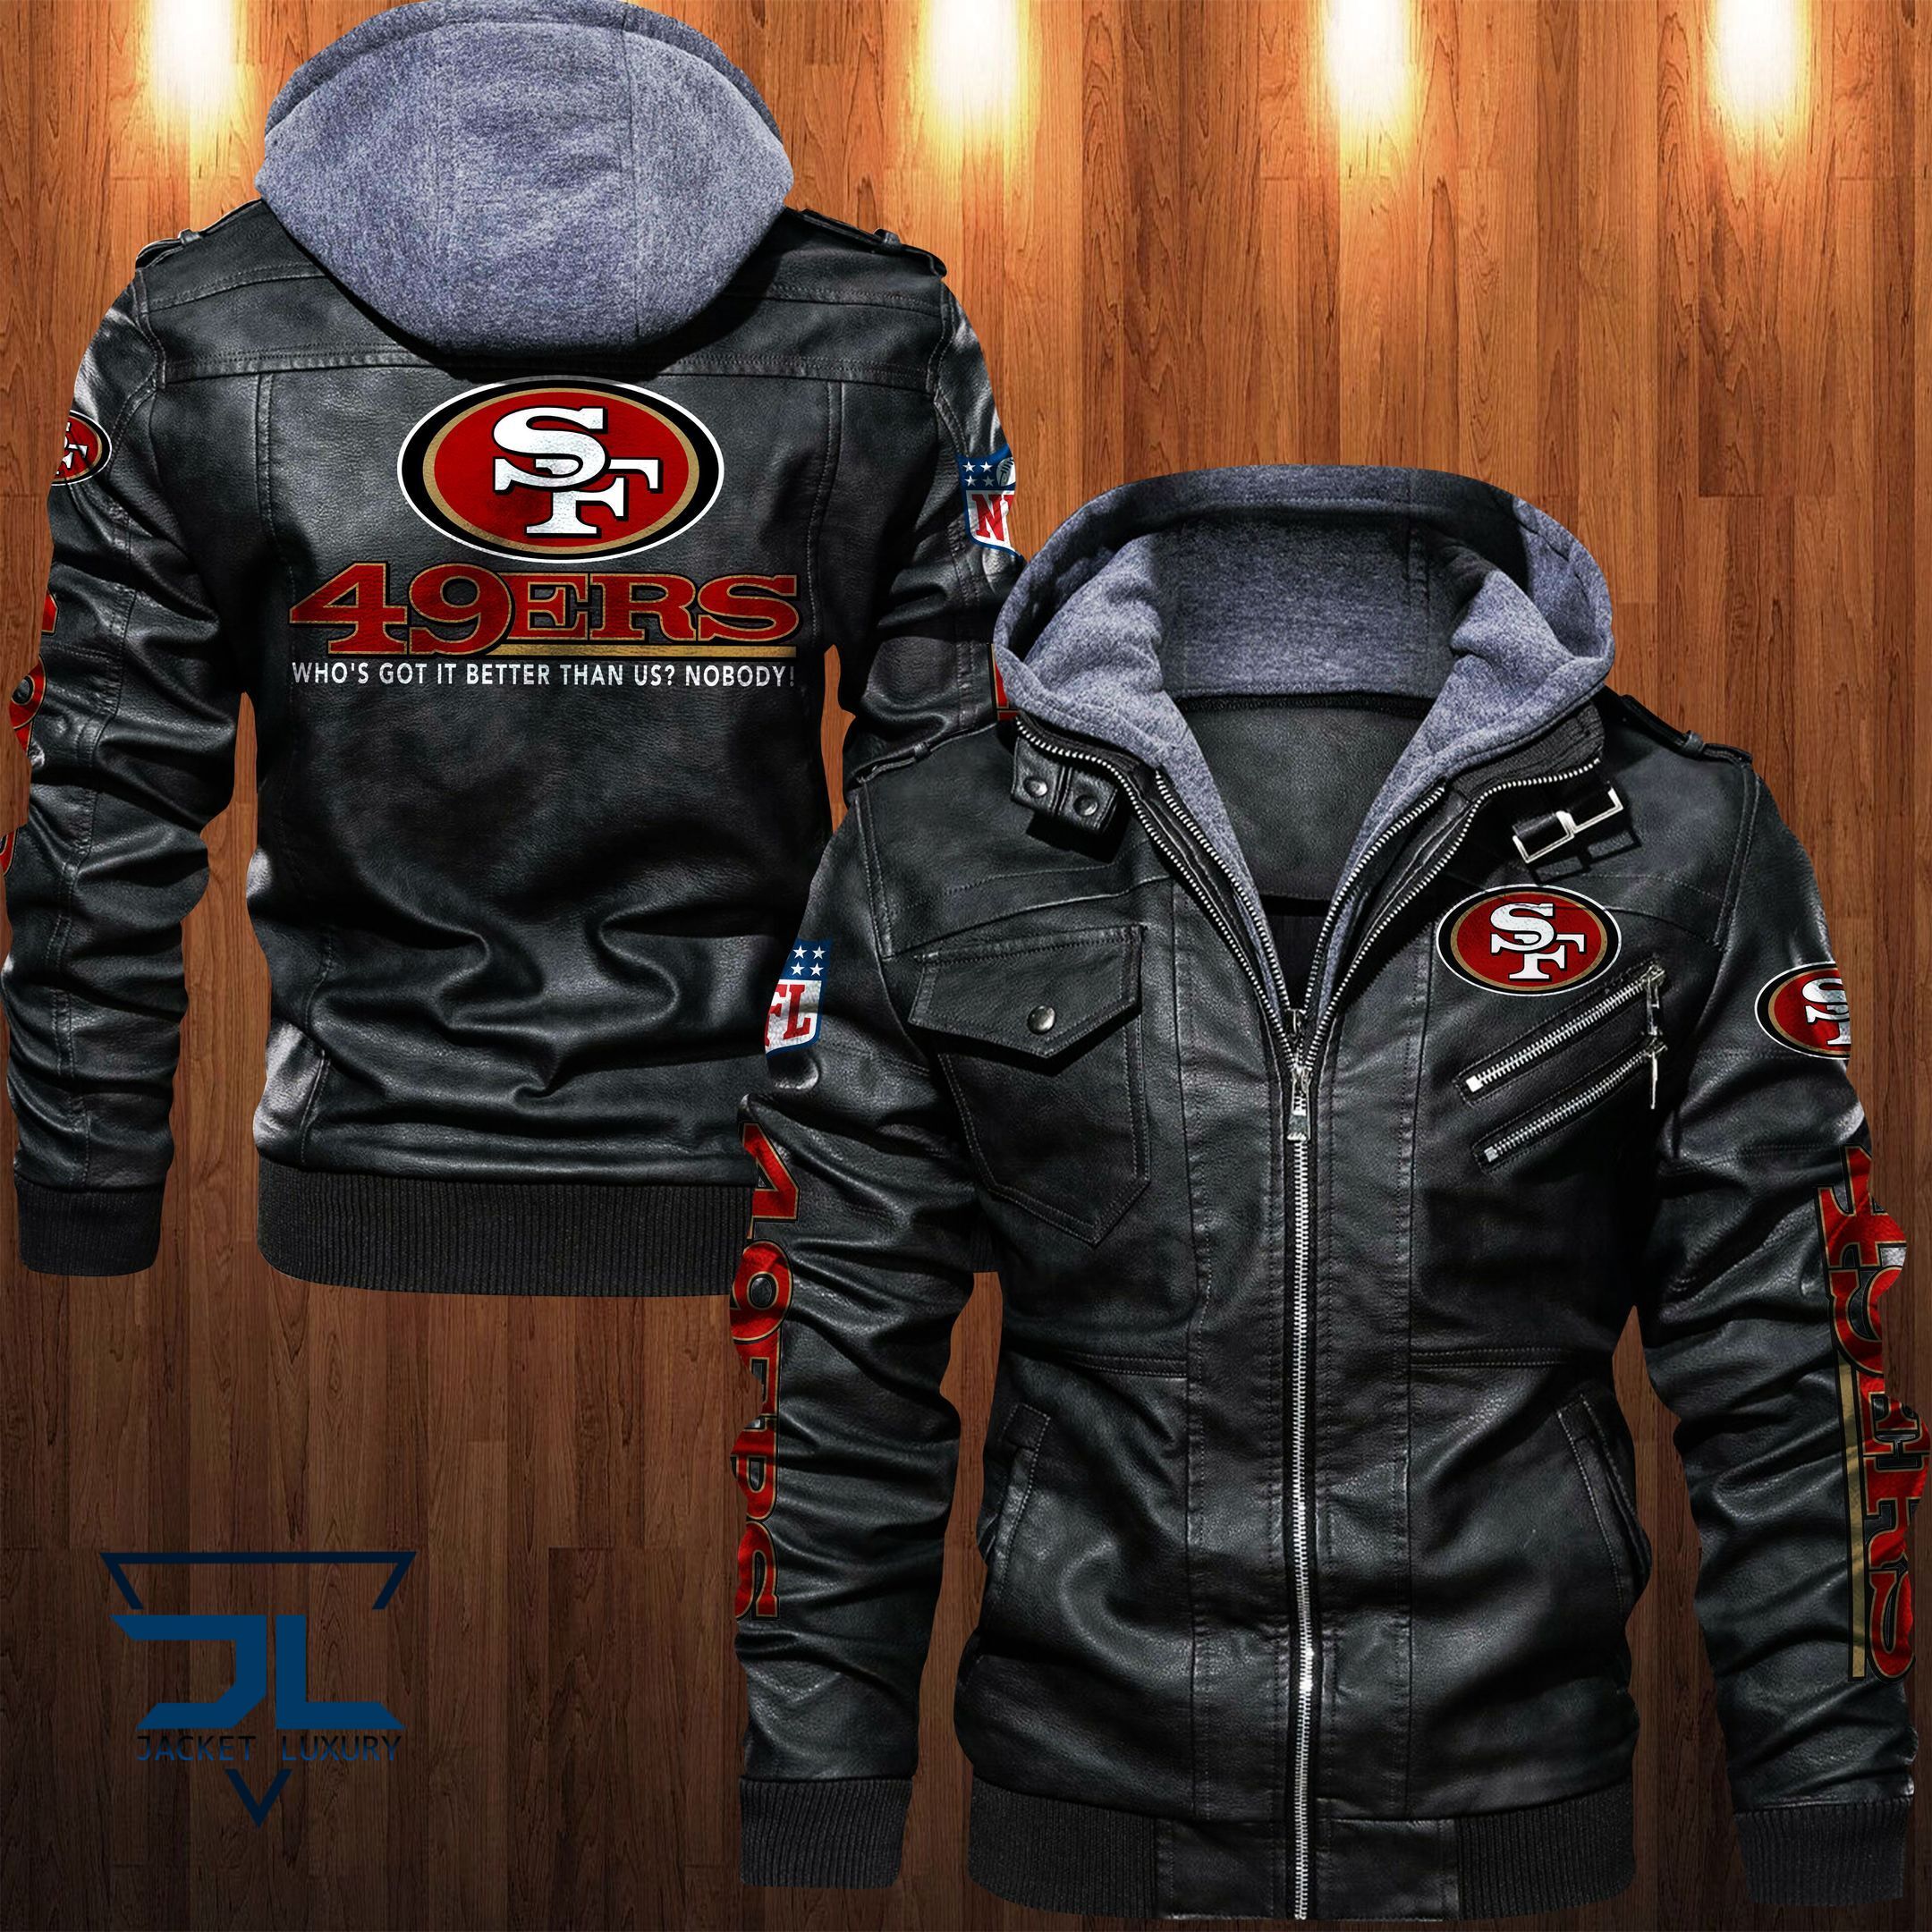 What Leather jacket Sells Best on Techcomshop? 56